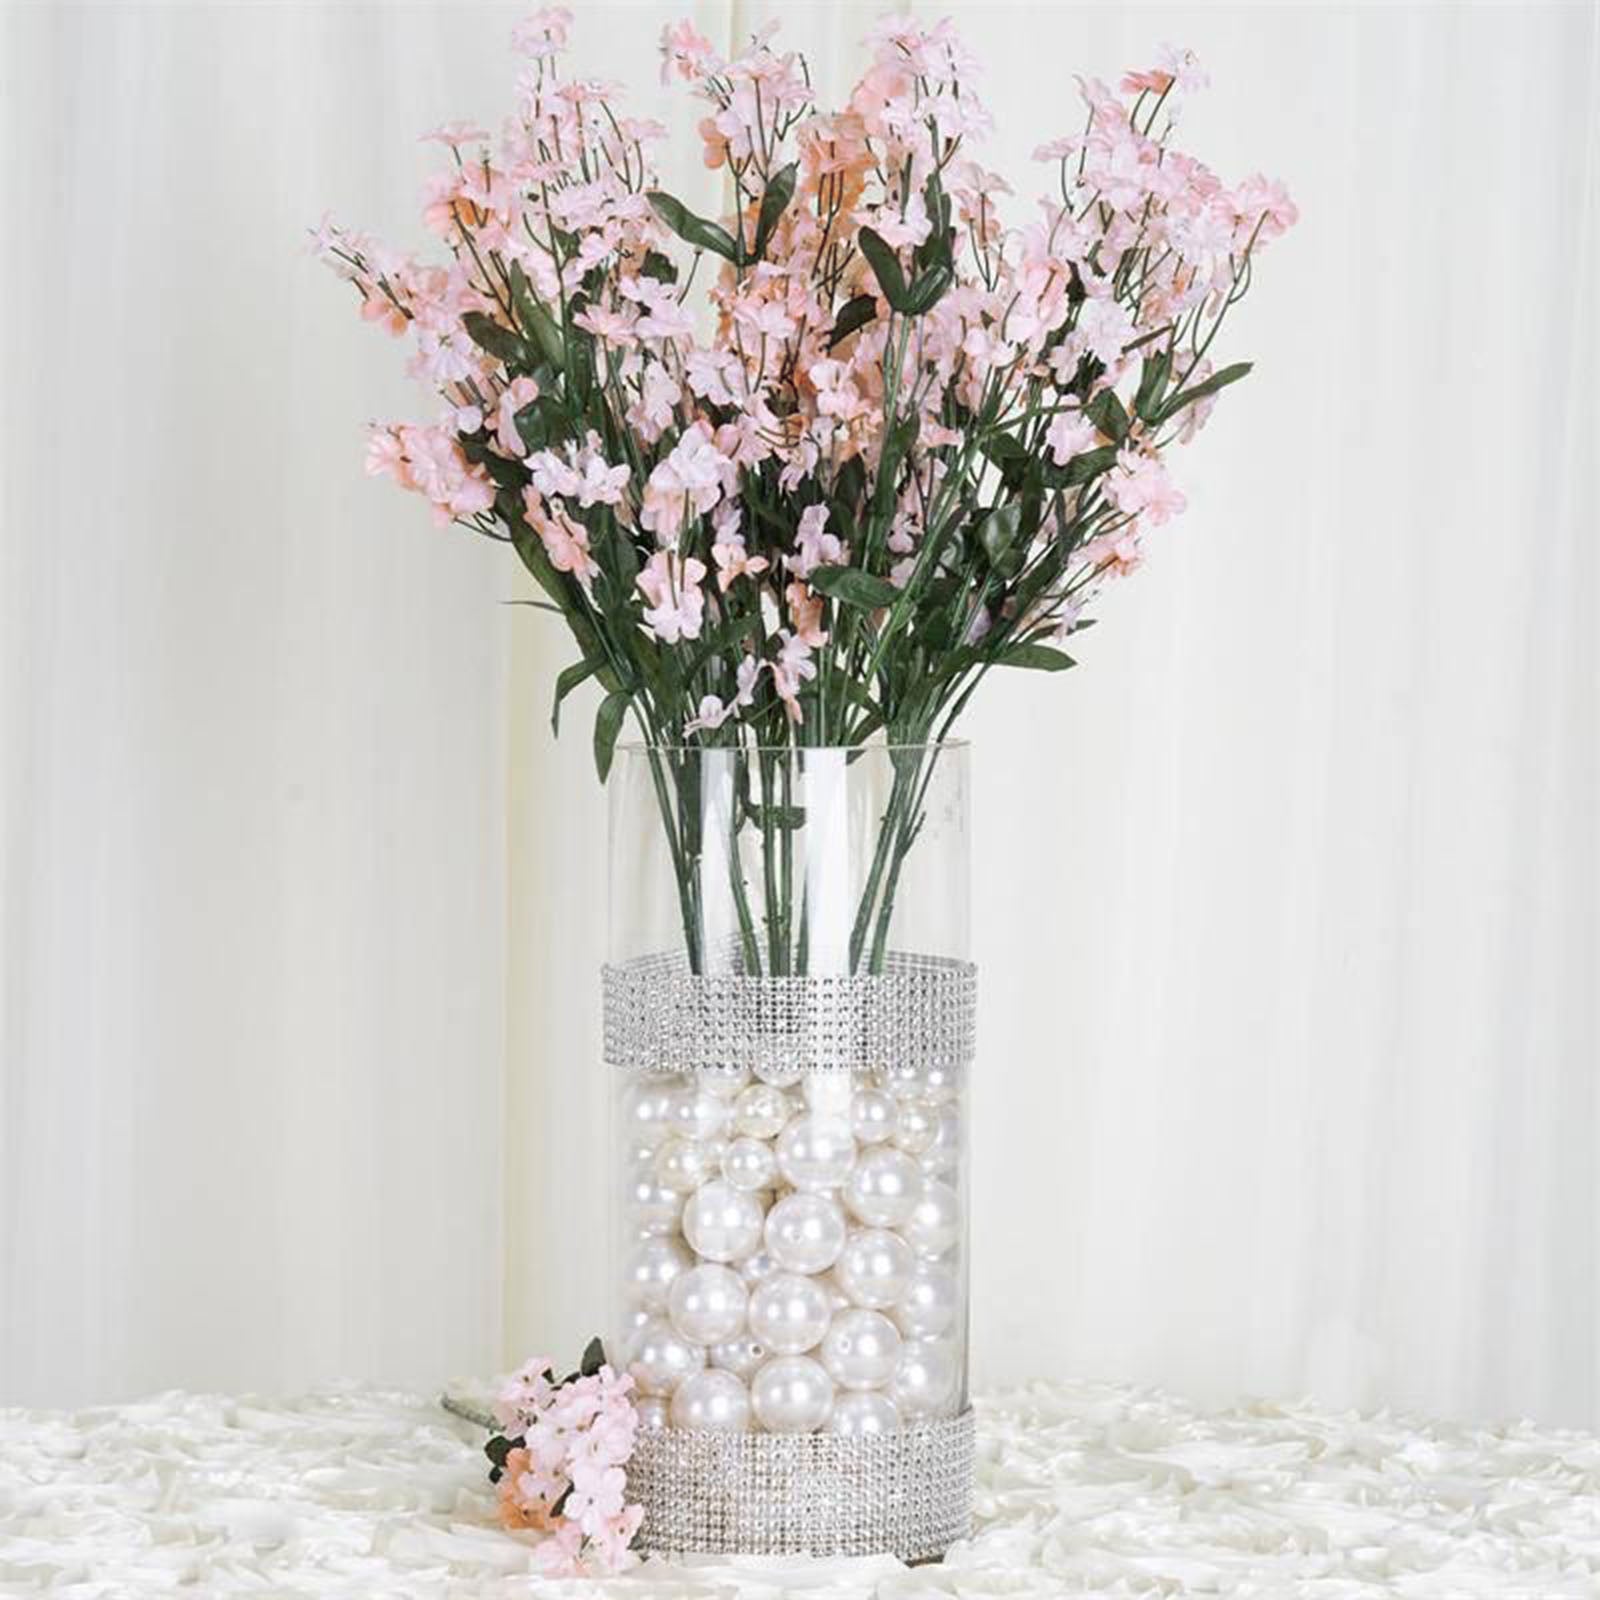 Efavormart 12 Bushes Baby Breath Artificial Filler Flowers for DIY Wedding Bouquets Centerpieces Arrangements Party Home Decoration, Pink